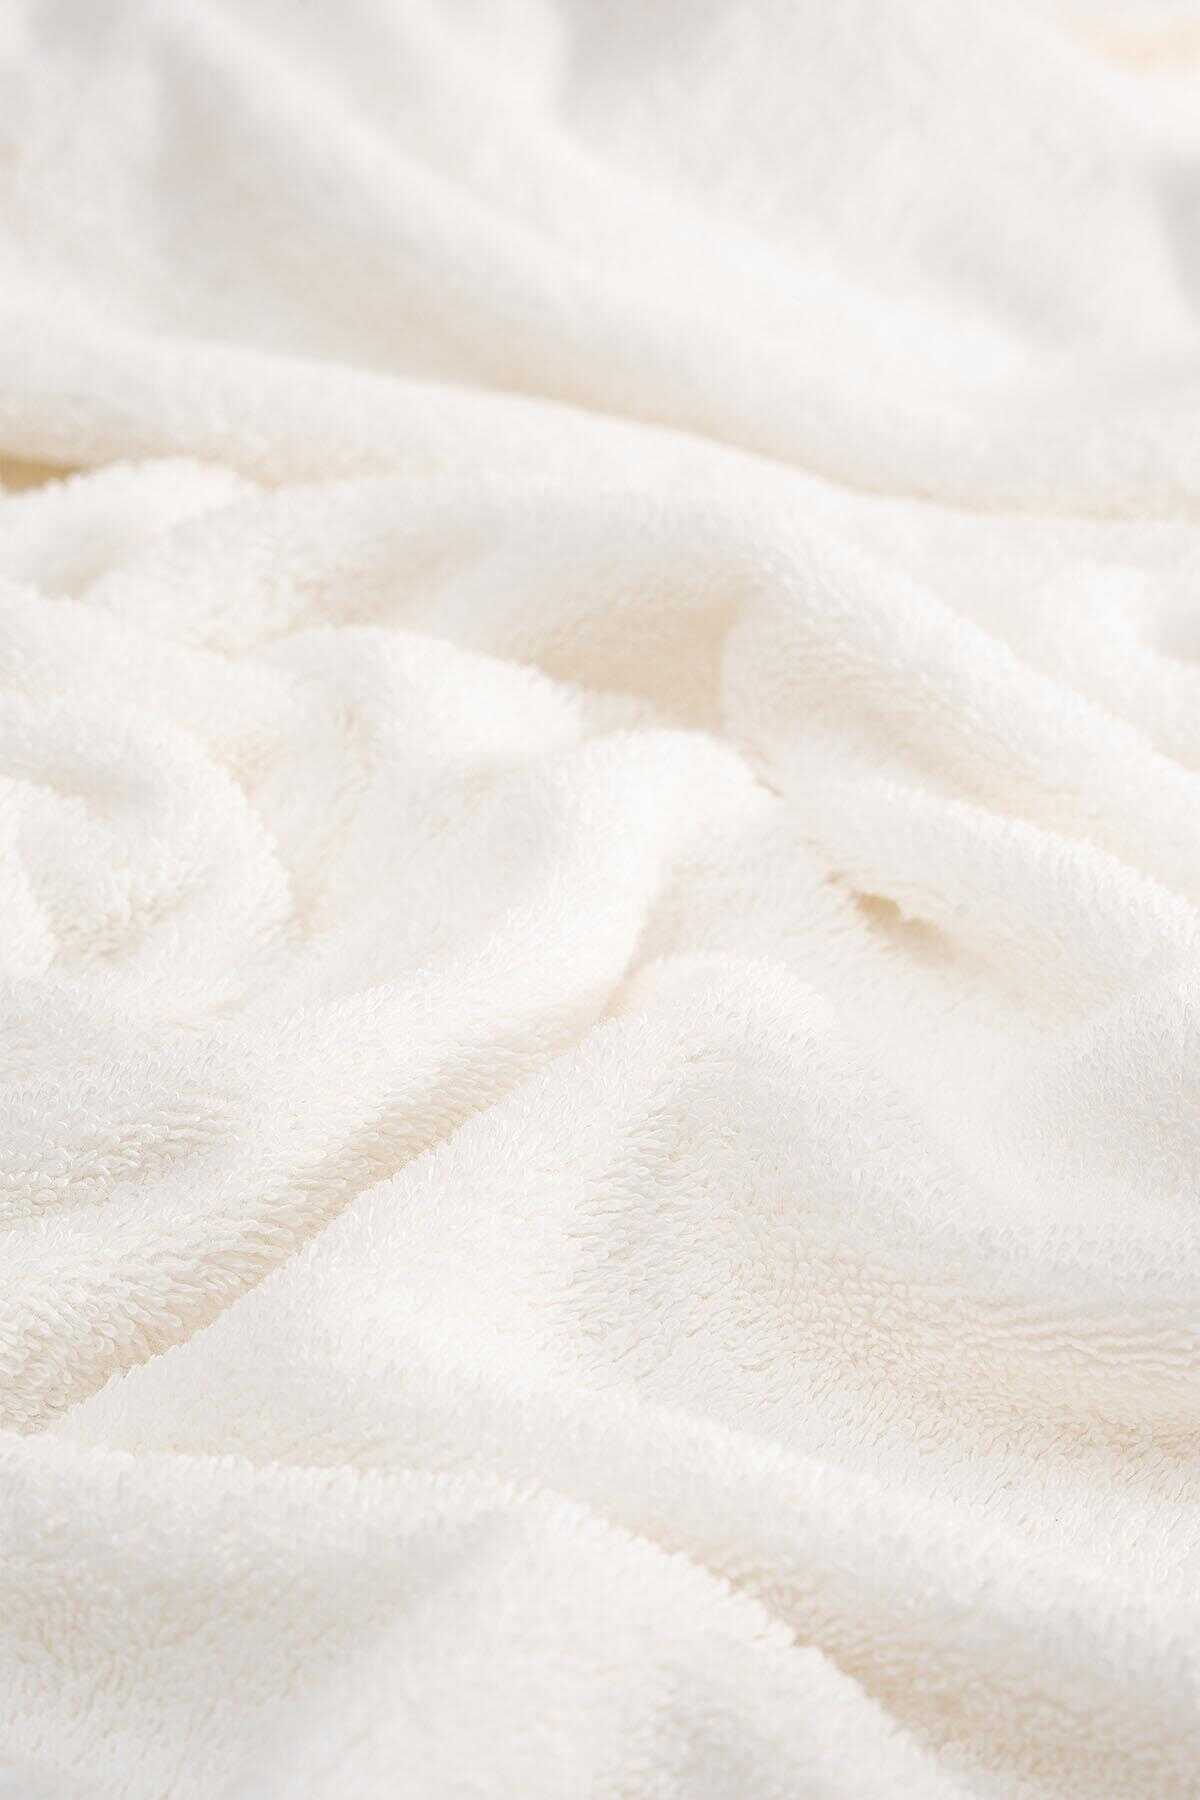 Ecocotton Liva Organic Cotton Woman's Face Towel 50x90 cm